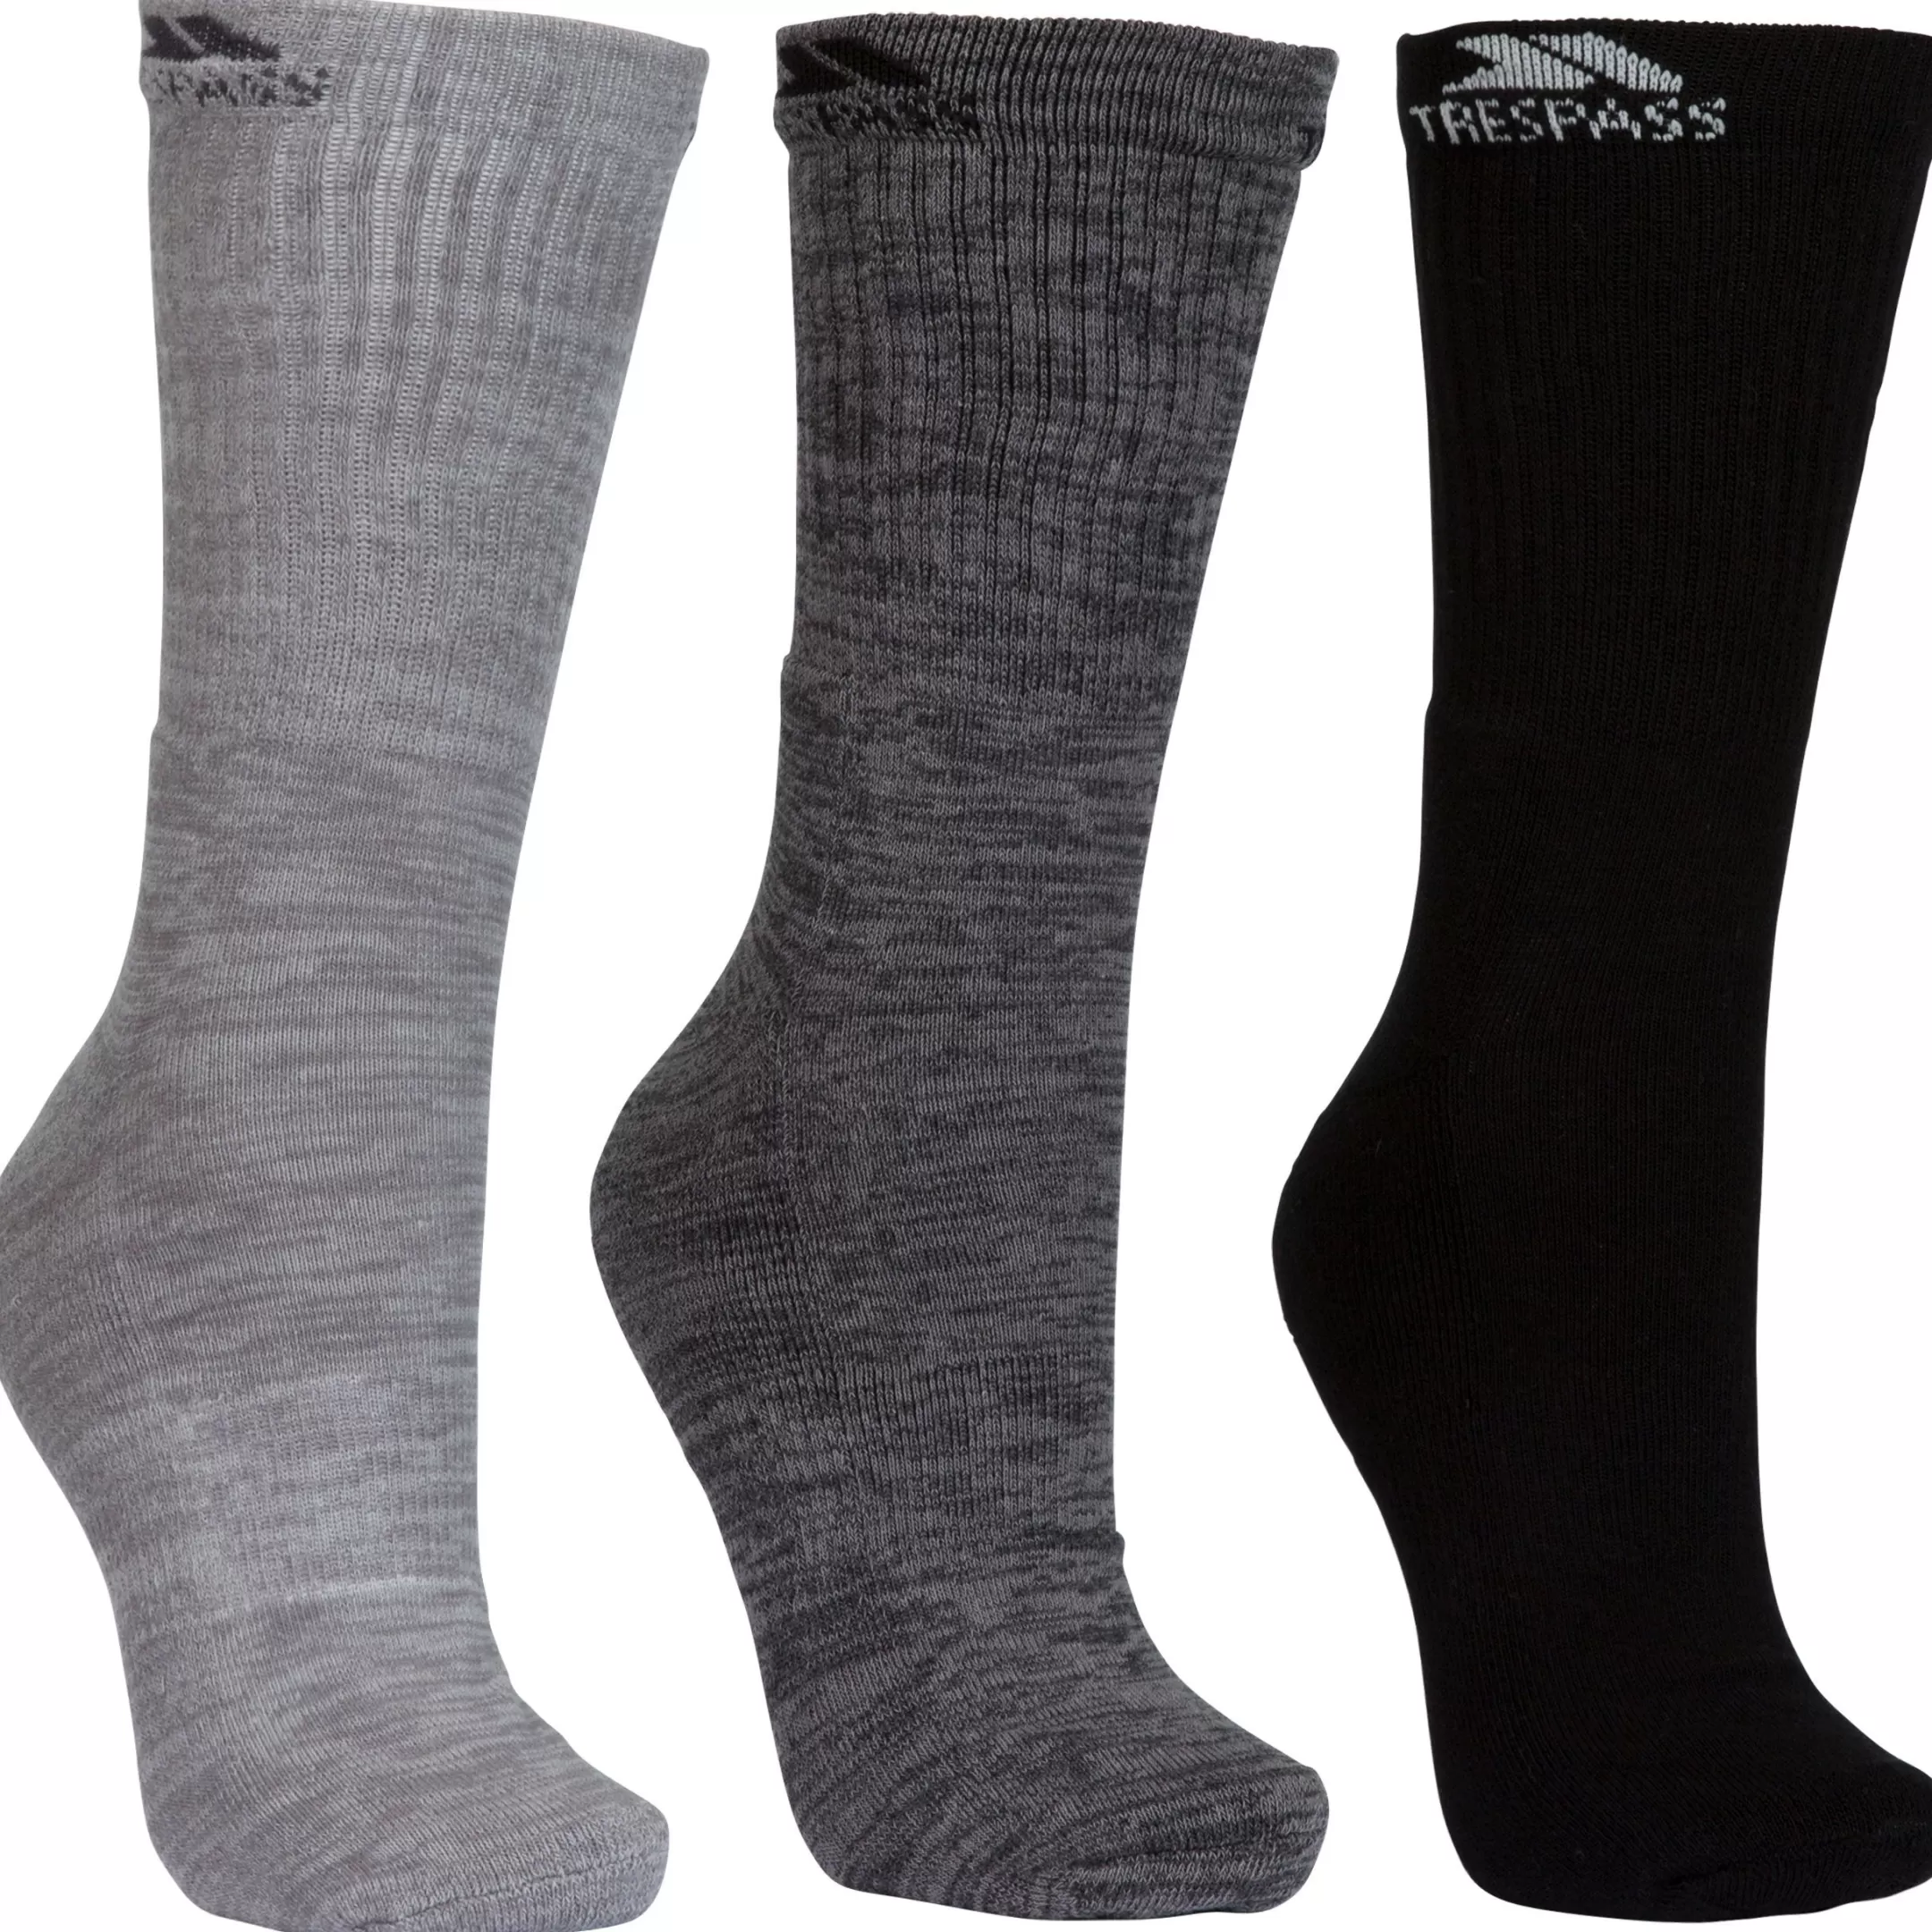 Unisex Casual Socks Jackbarrow | Trespass Flash Sale